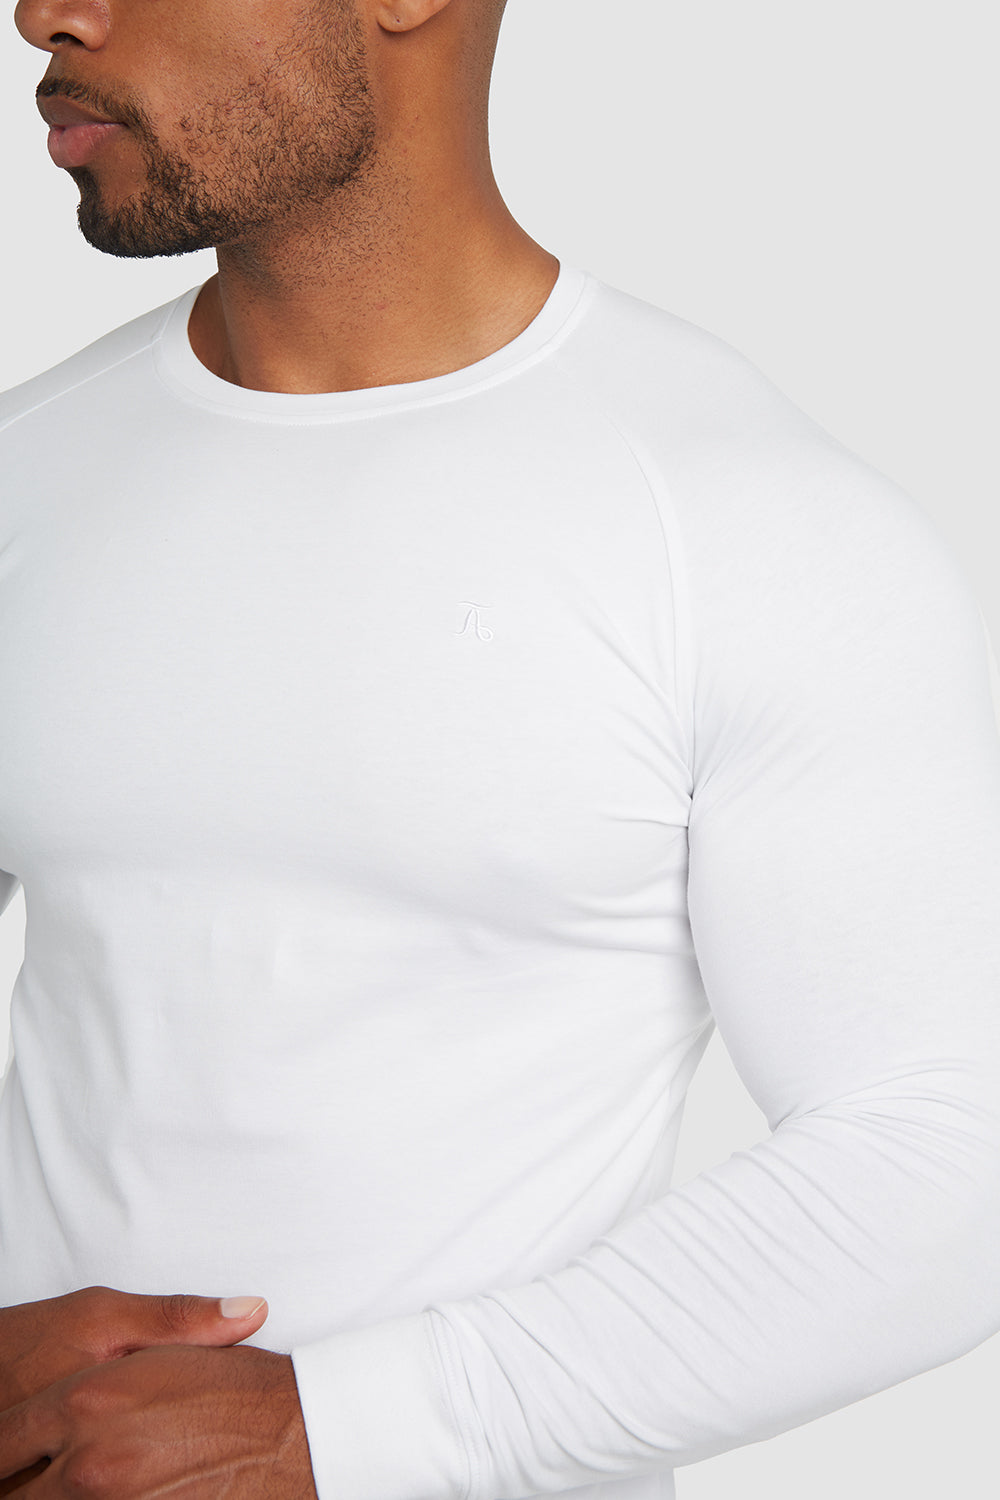 Logo Athletic Men's T-Shirt - White - L